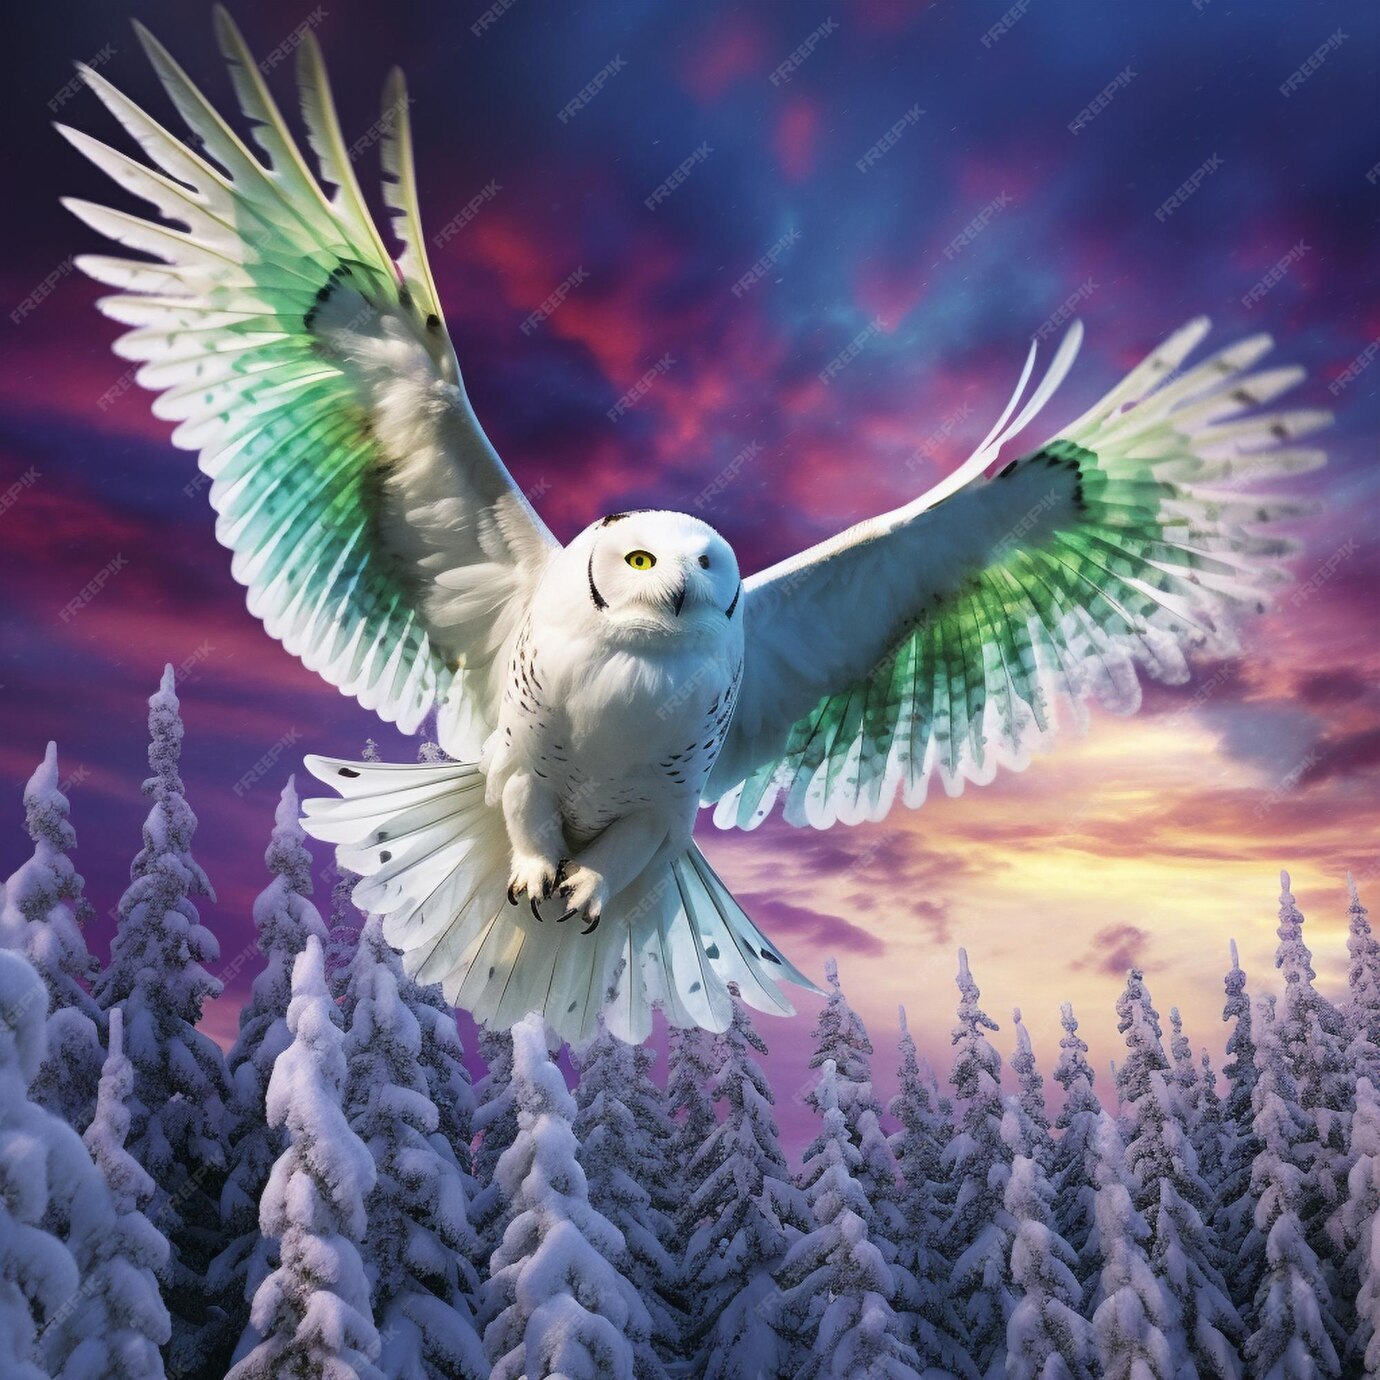 aurora-aviator-snow-owls-dancing-northern-lights_902820-7569.jpg